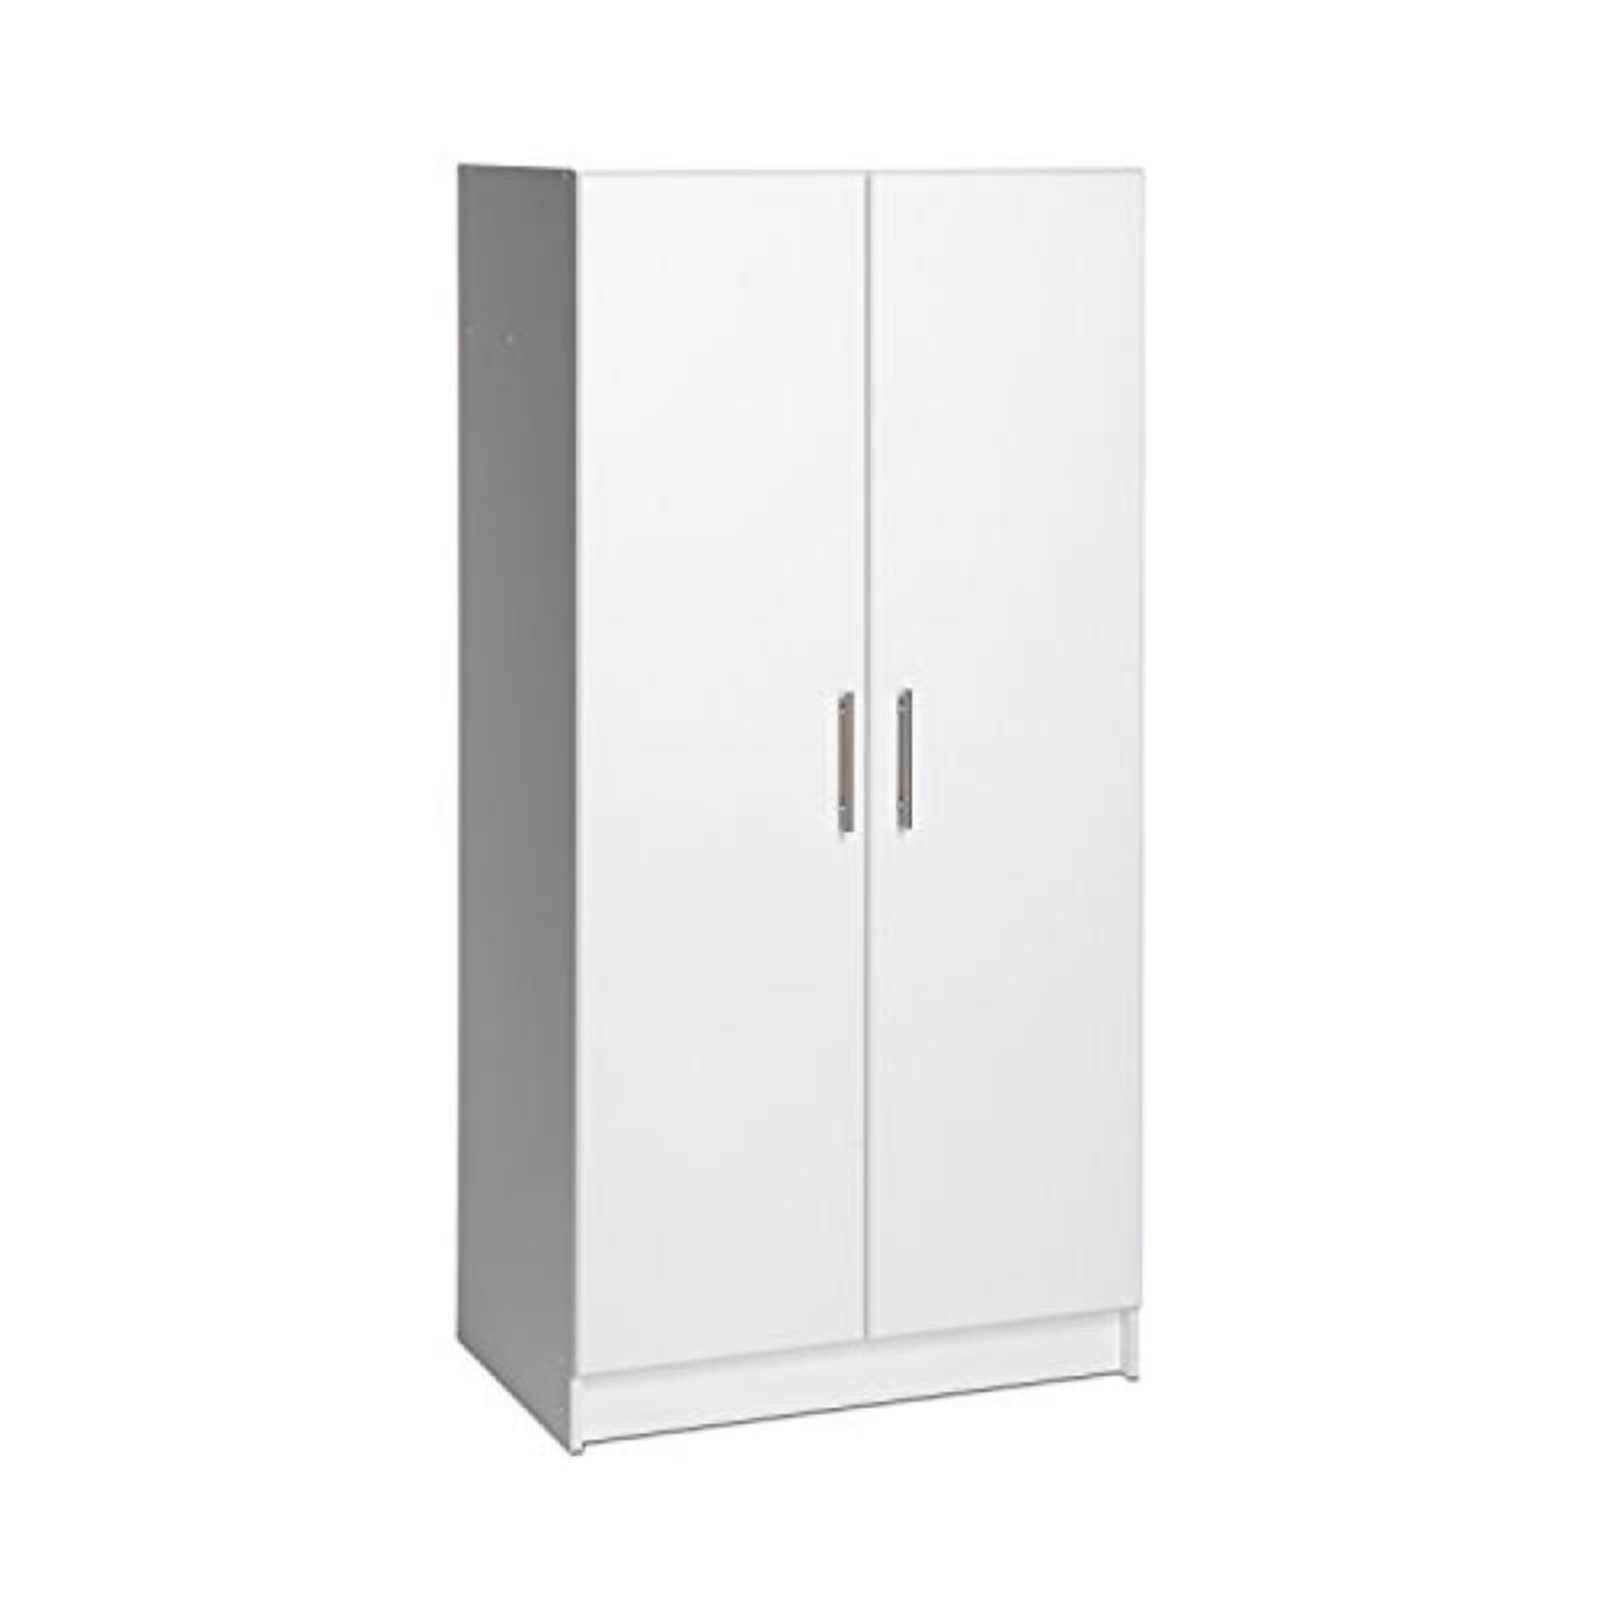 Prepac Elite 32" Wood Composite Wardrobe with Shelves - White